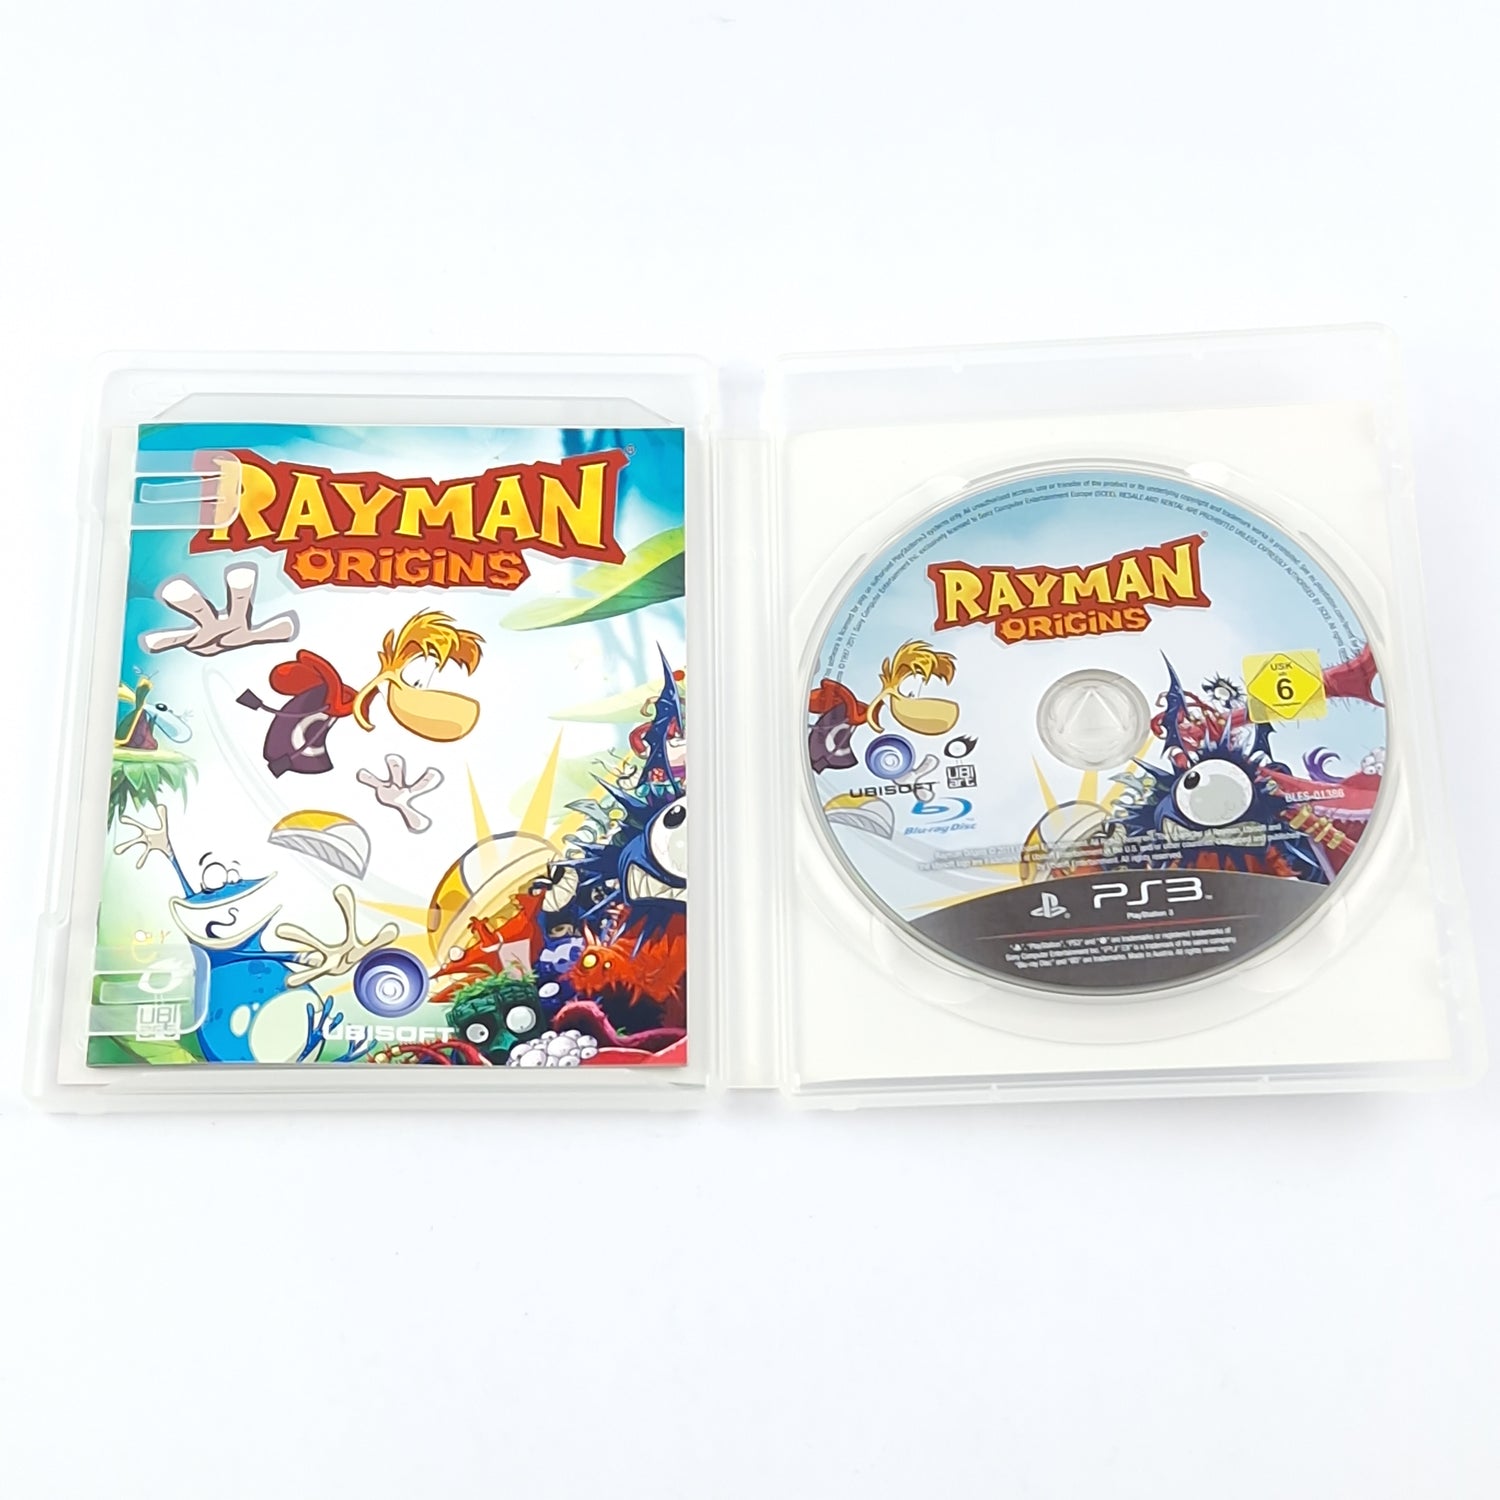 Playstation 3 Spiel : Rayman Origins - OVP Anleitung CD - SONY PS3